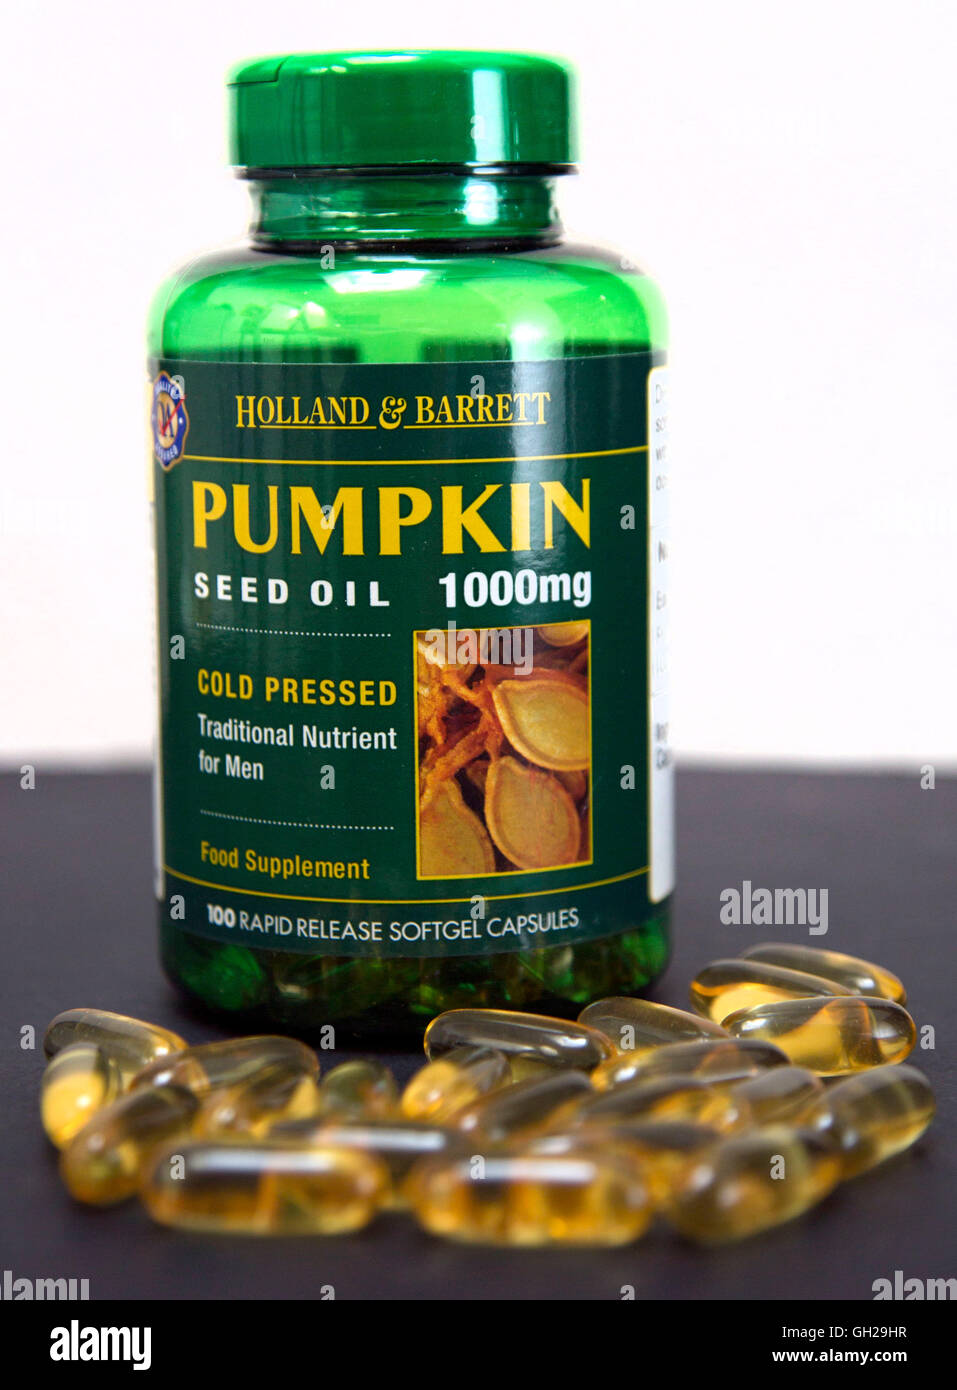 Pumpkin seed oil capsules, London Stock Photo - Alamy